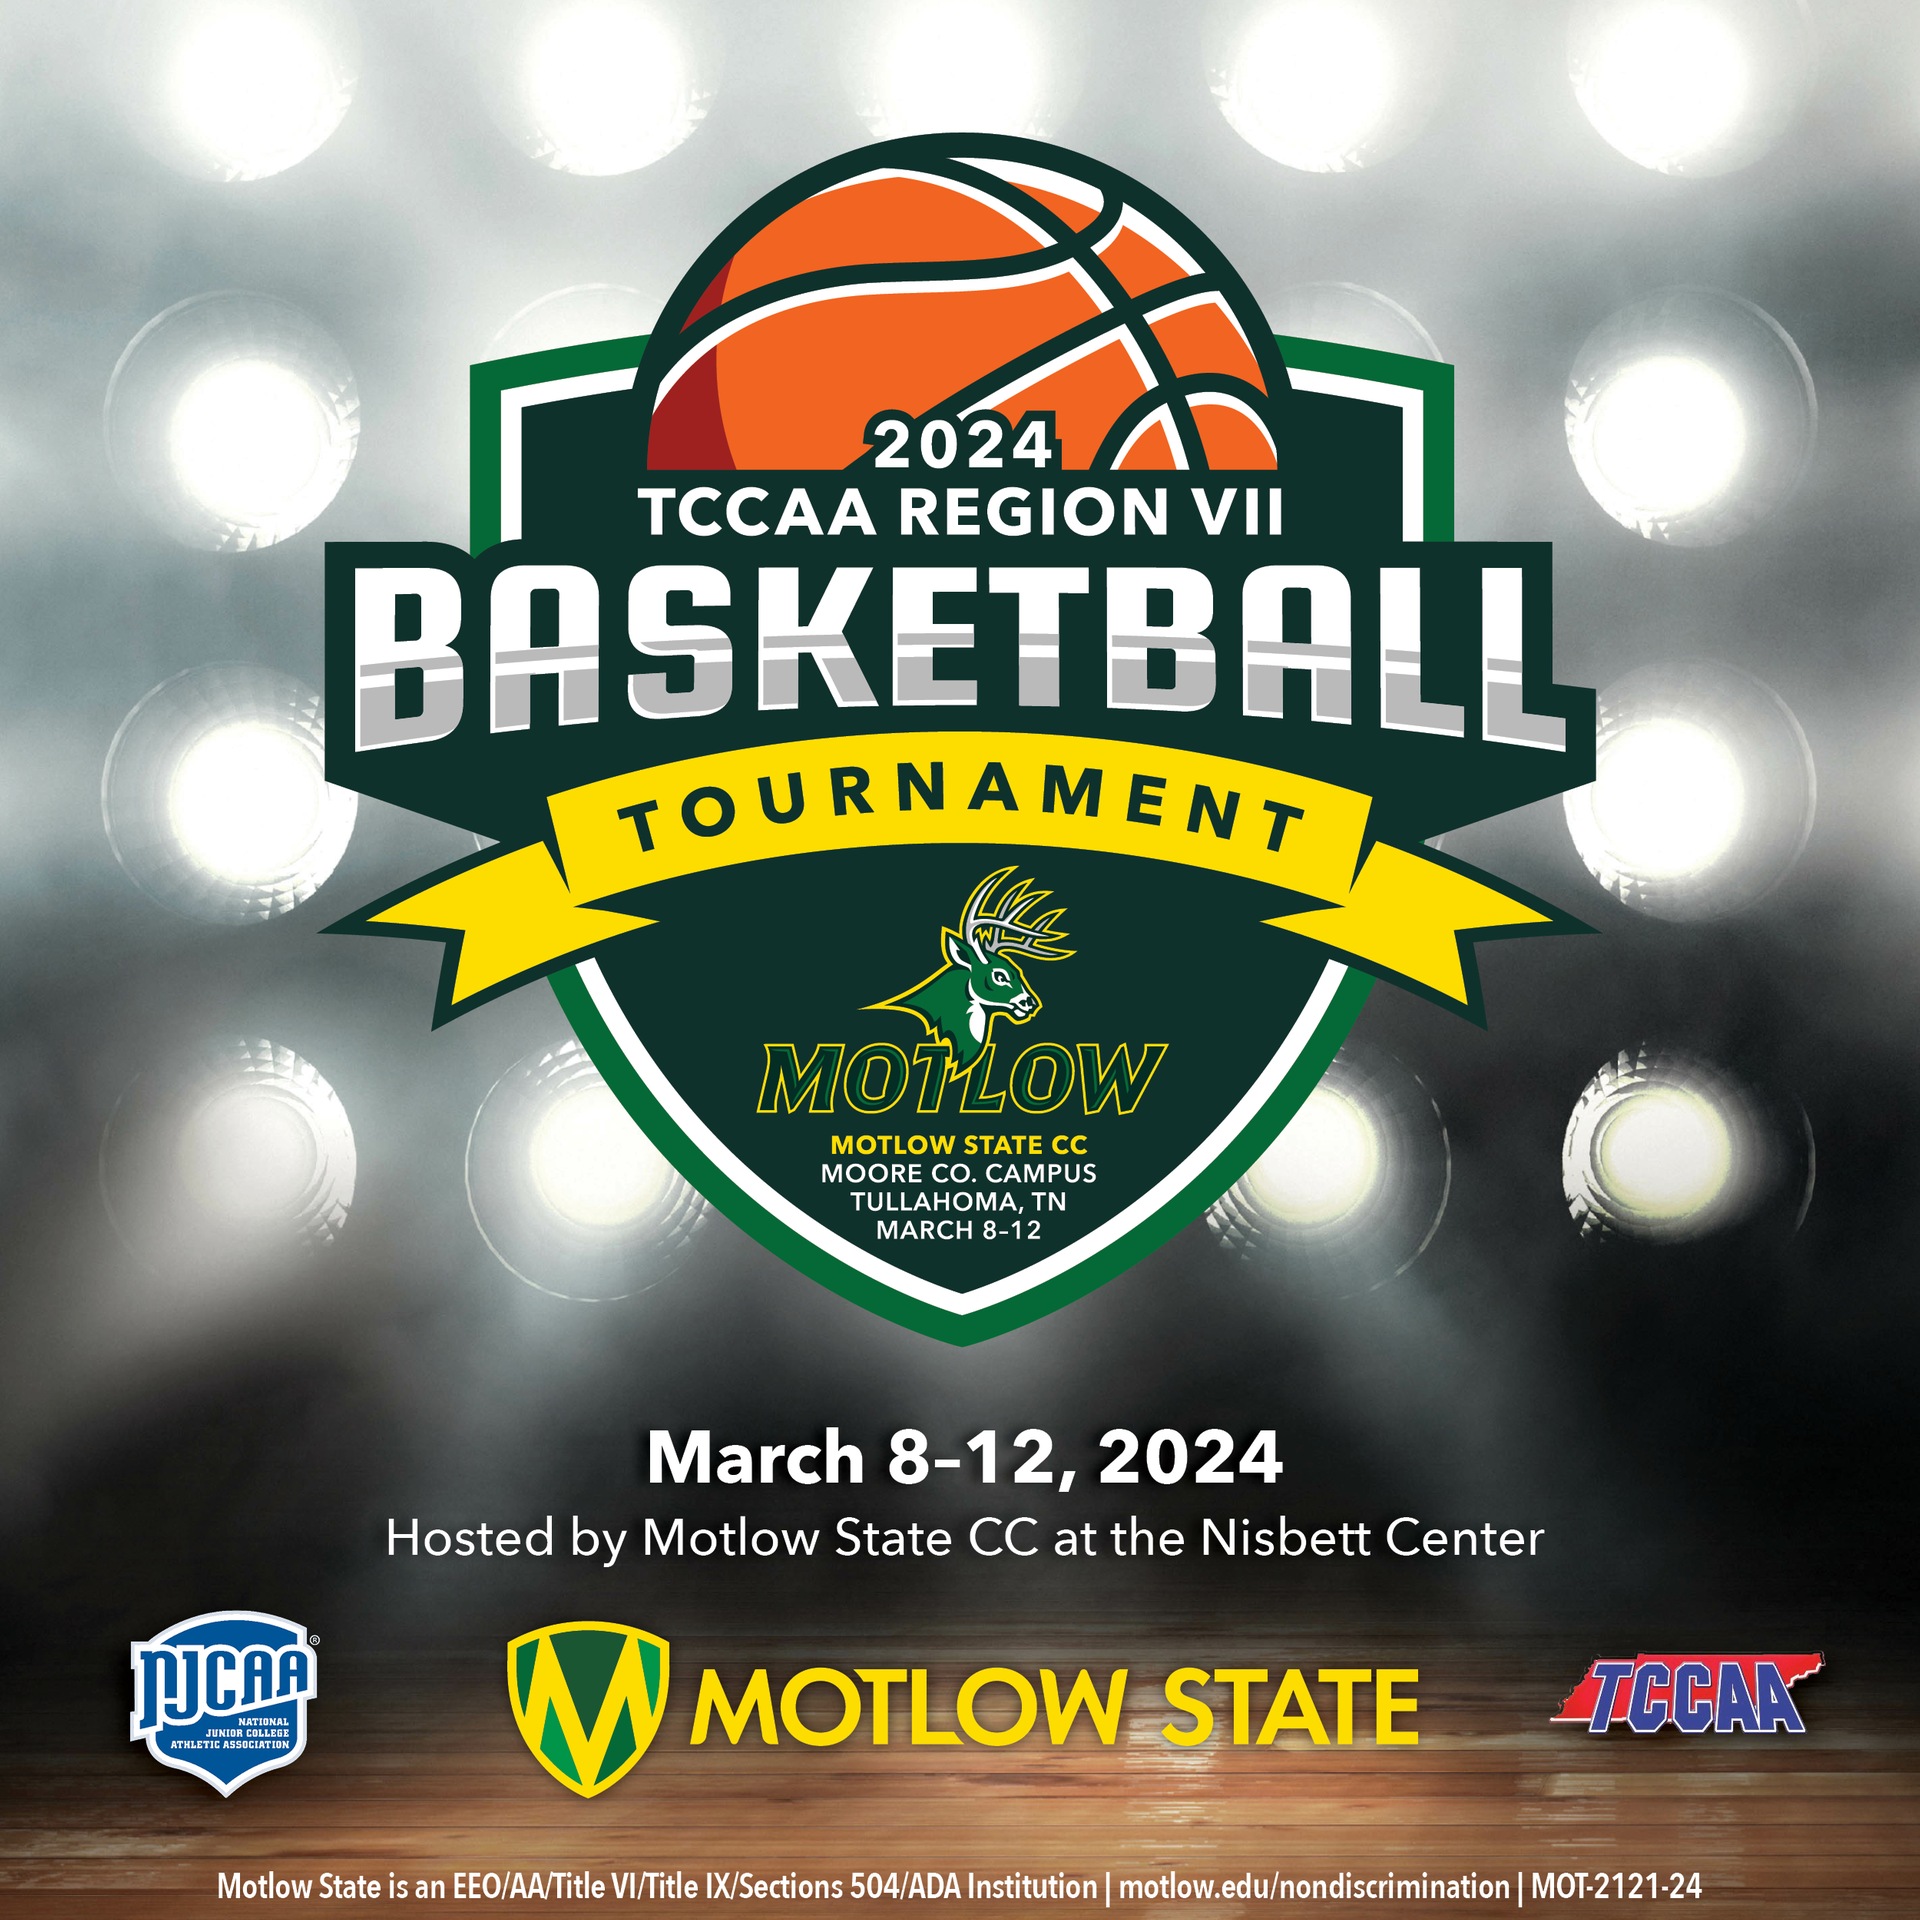 Motlow State Hosts TCCAA Tournament